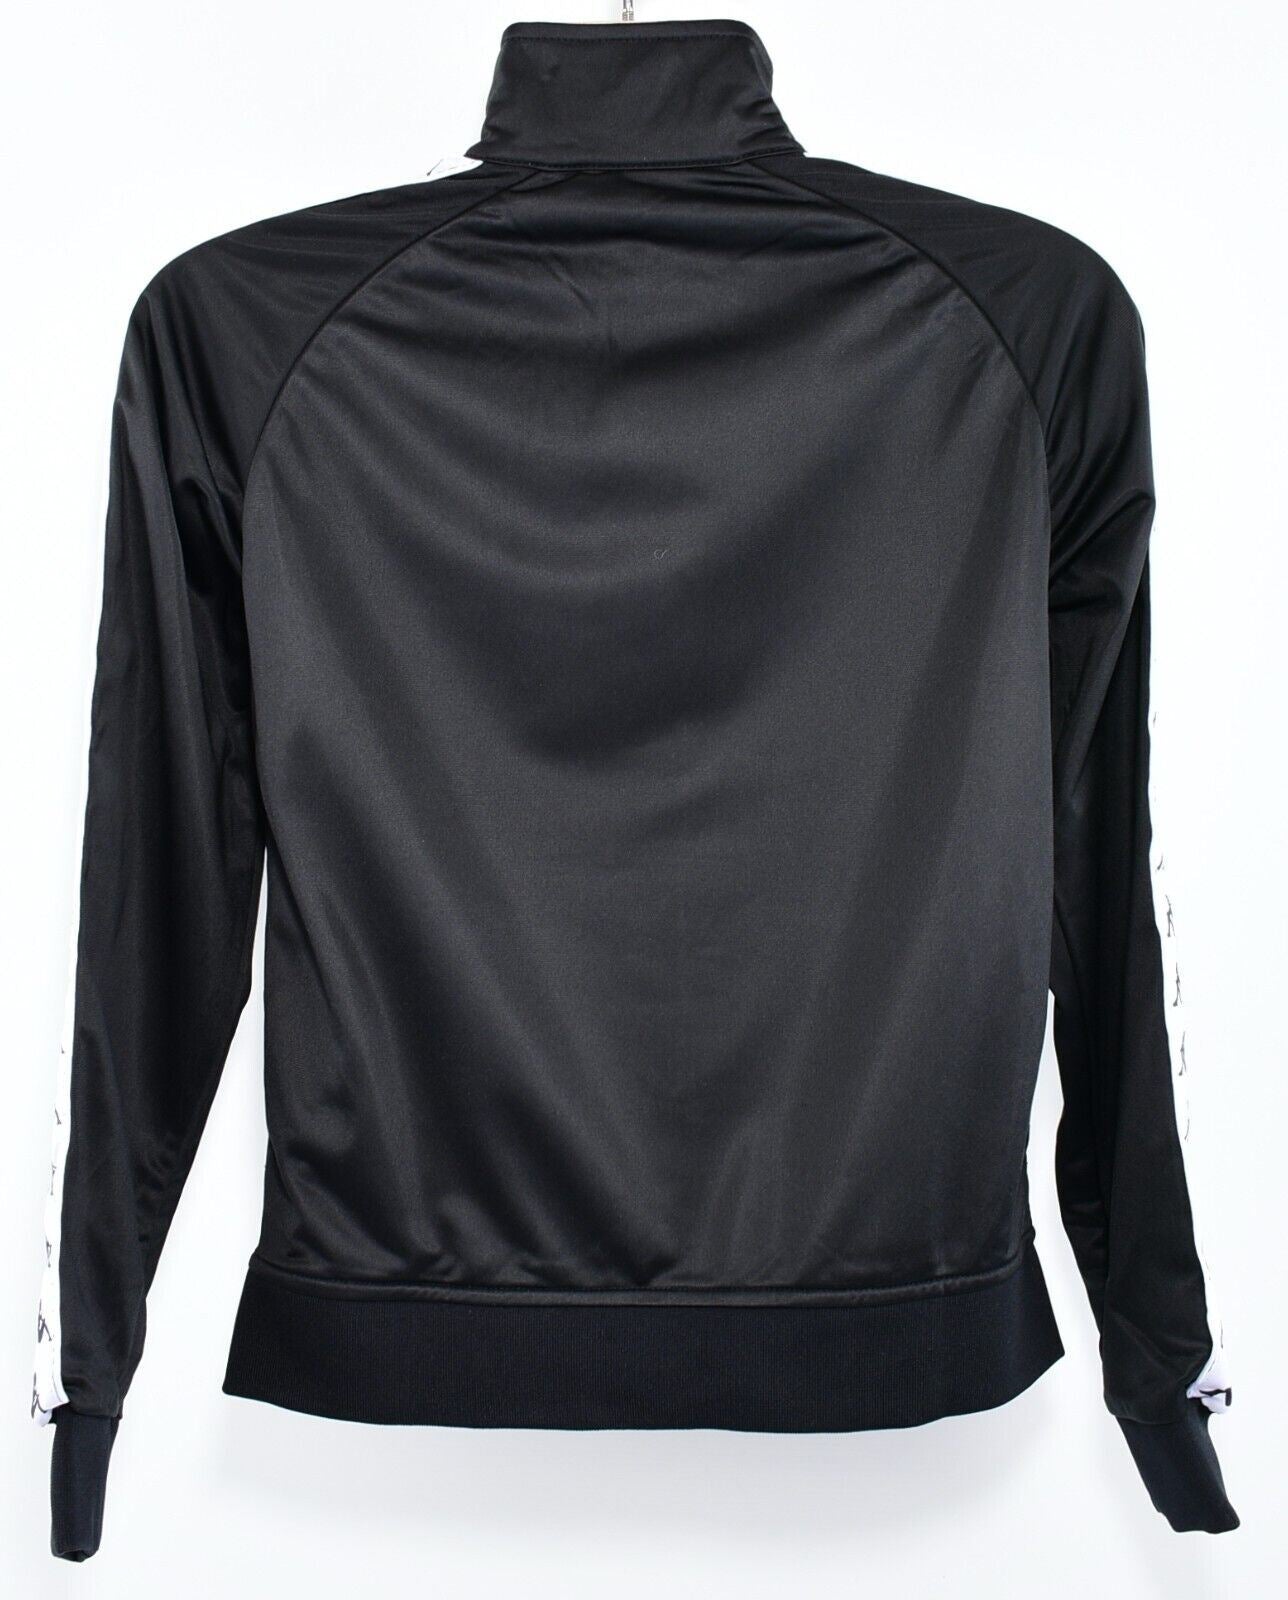 KAPPA Men's Full Zip Track Jacket, Track Suit Top,  SLIM FIT, Black, size MEDIUM